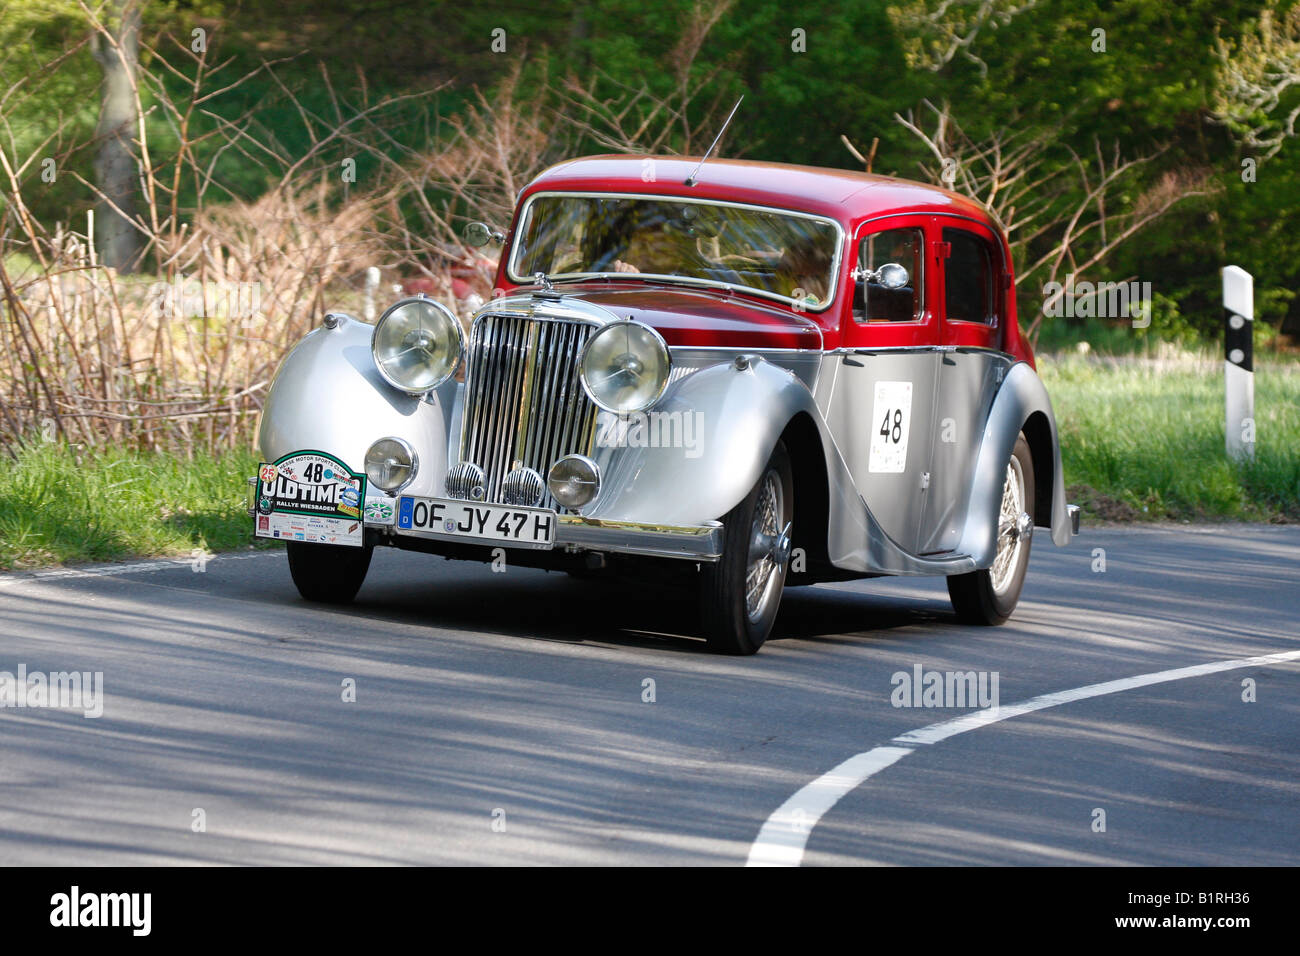 Jaguar MK4, year of manufacture 1947, Oldtimer Ralley Wiesbaden 2008, Hesse, Germany, Europe Stock Photo